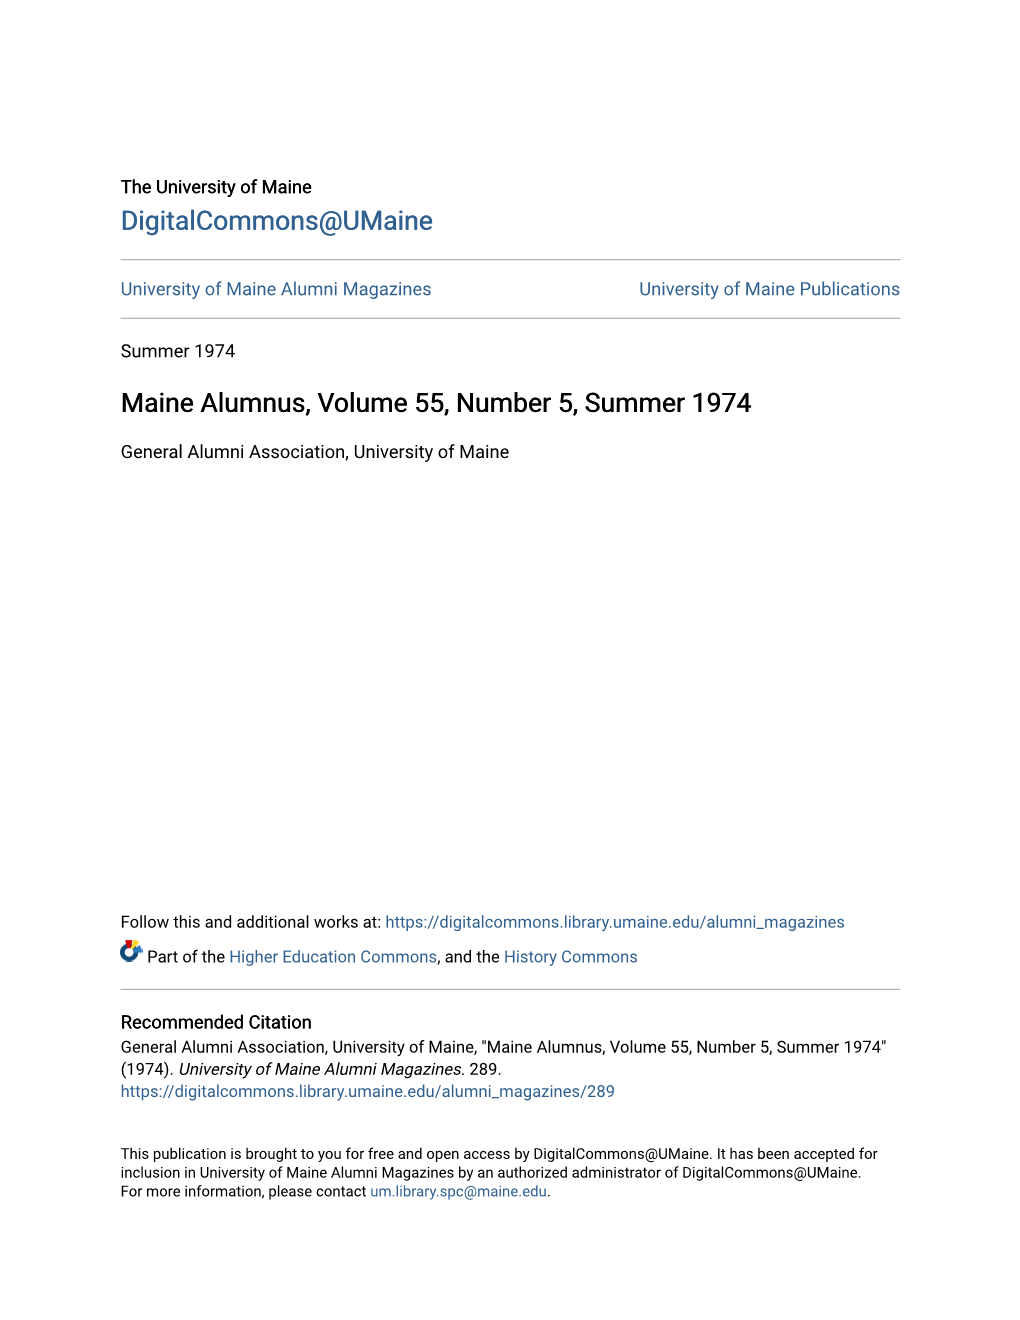 Maine Alumnus, Volume 55, Number 5, Summer 1974